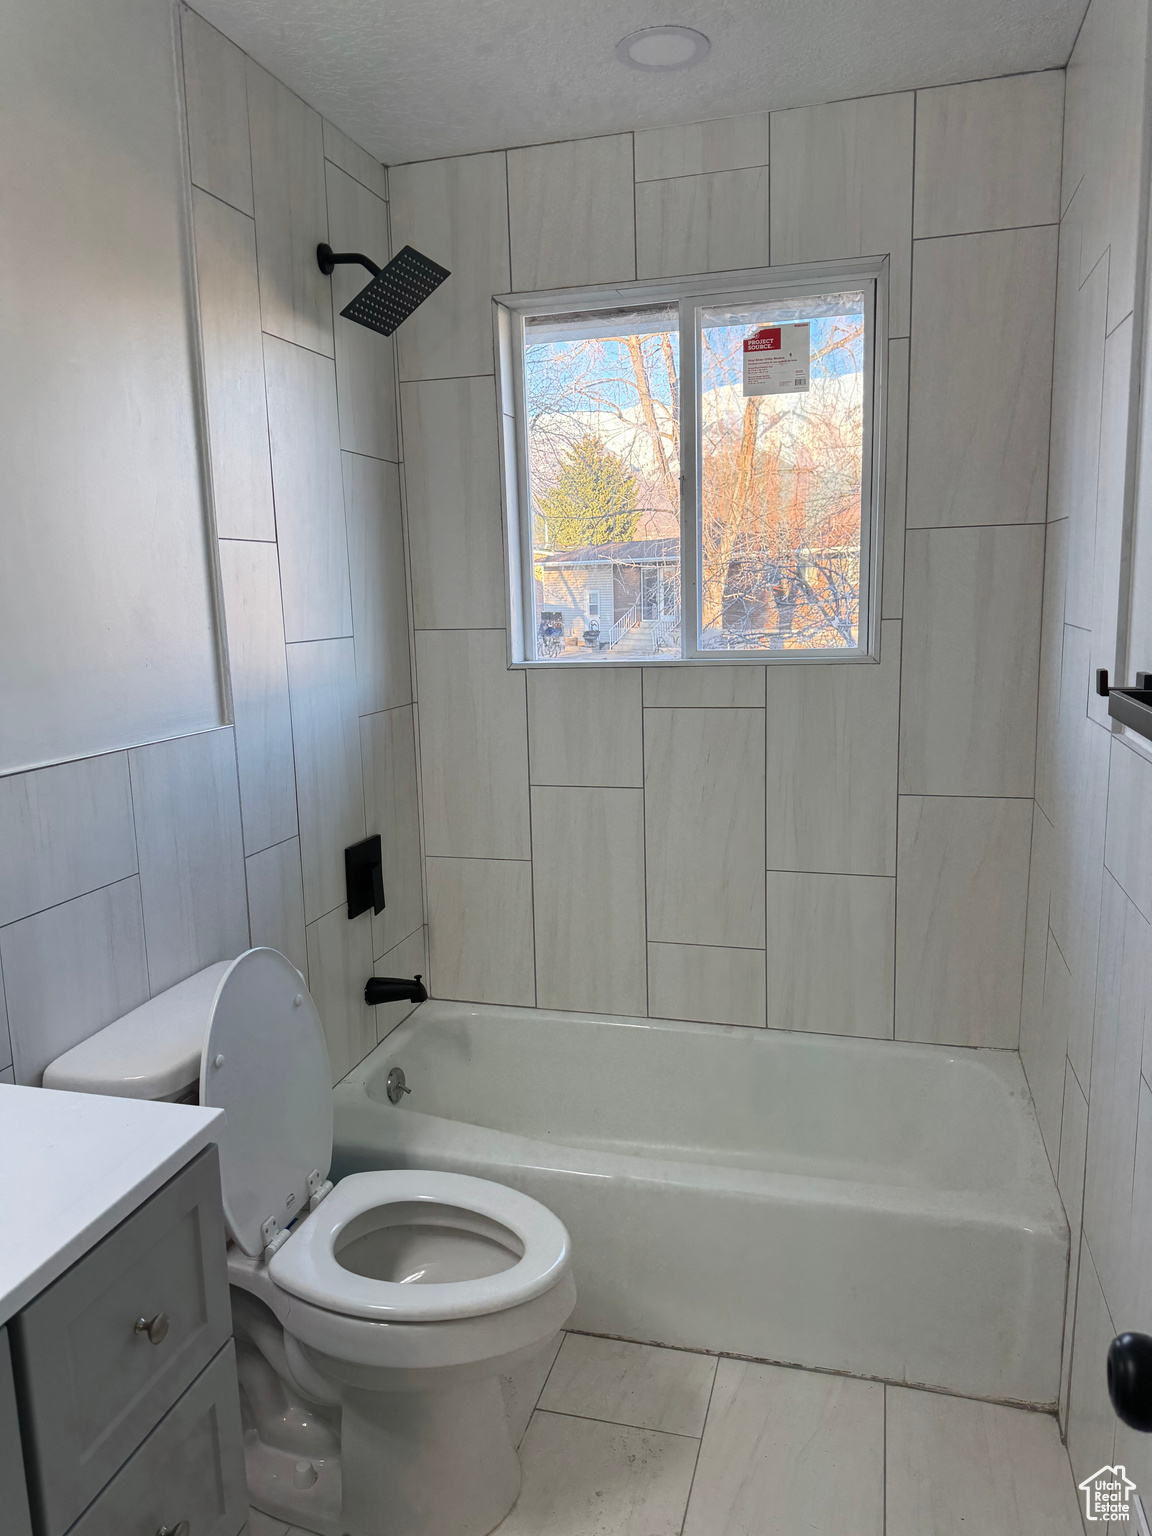 Full bathroom featuring tiled shower / bath, toilet, tile floors, and vanity